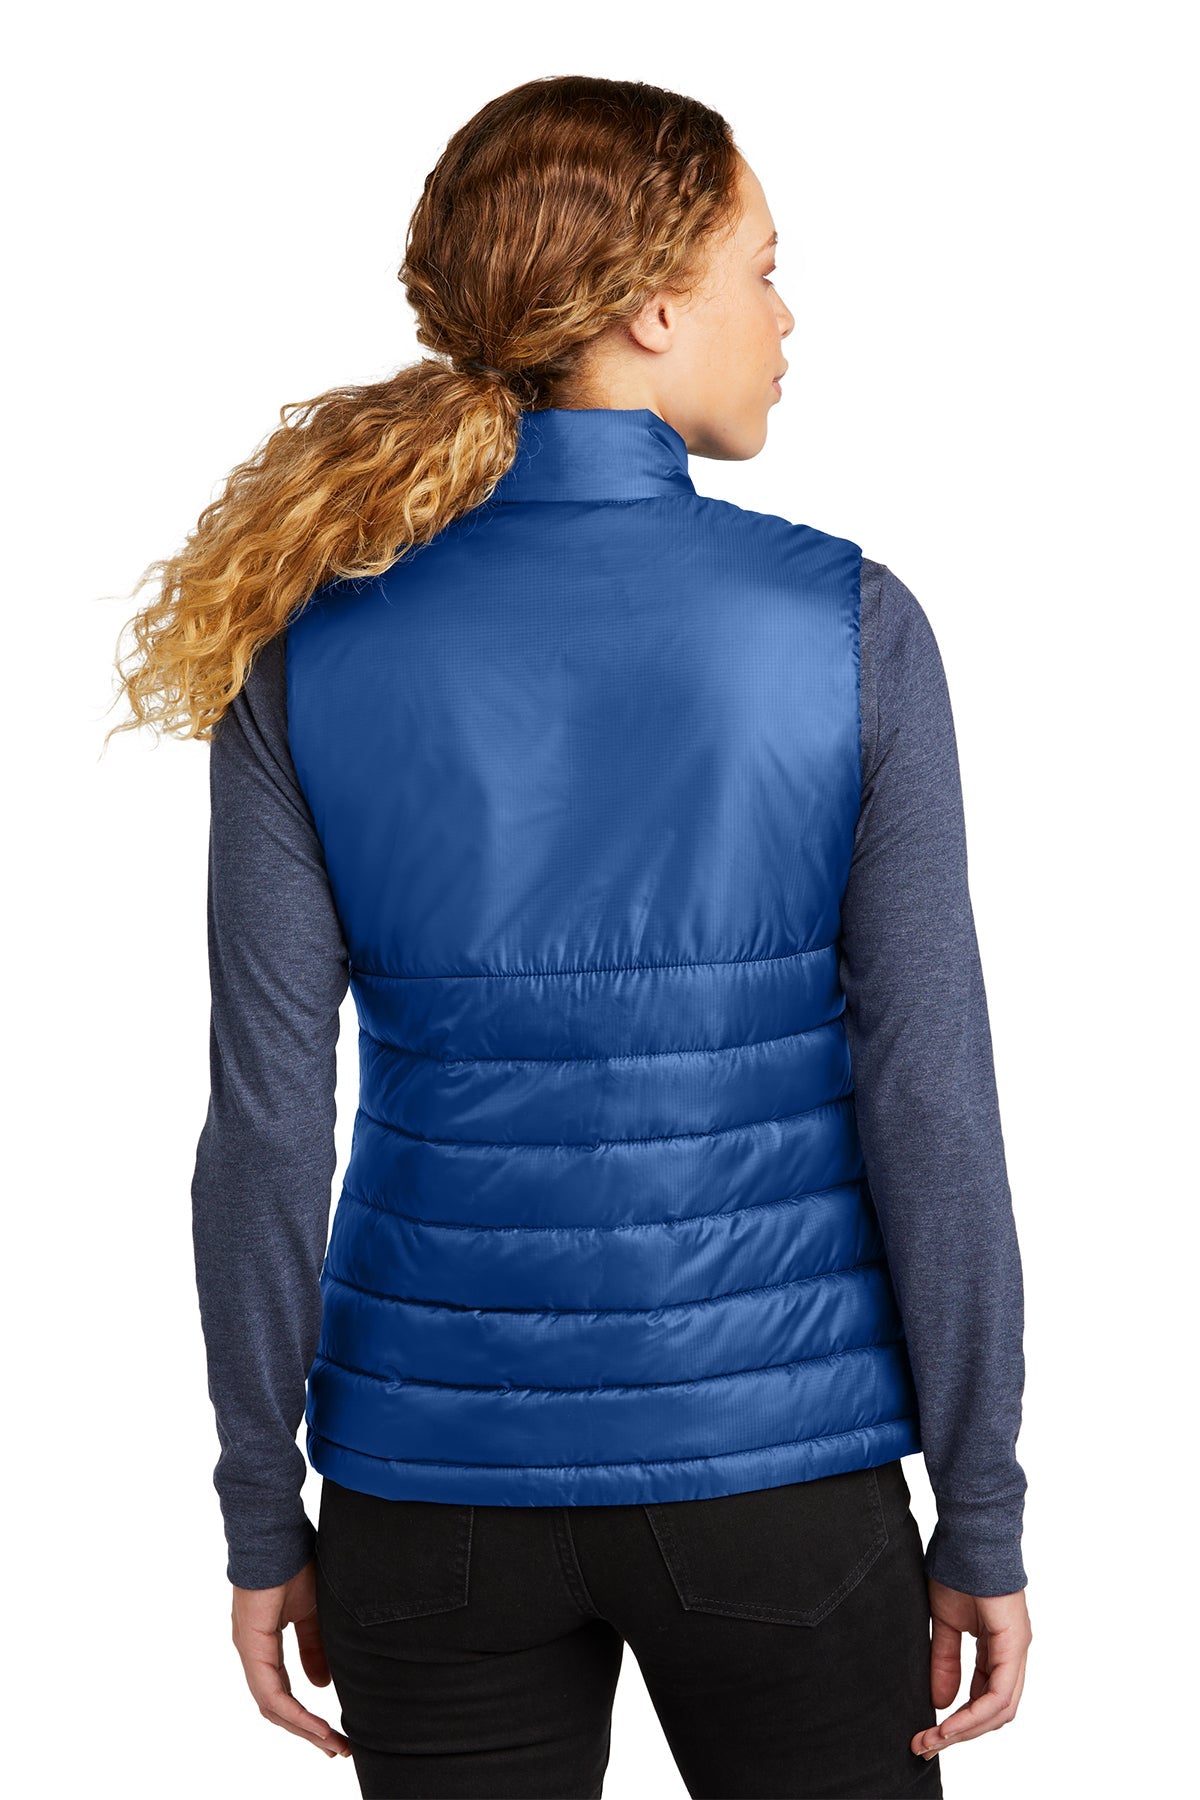 Eddie Bauer Ladies Customized Quilted Vests, Cobalt Blue